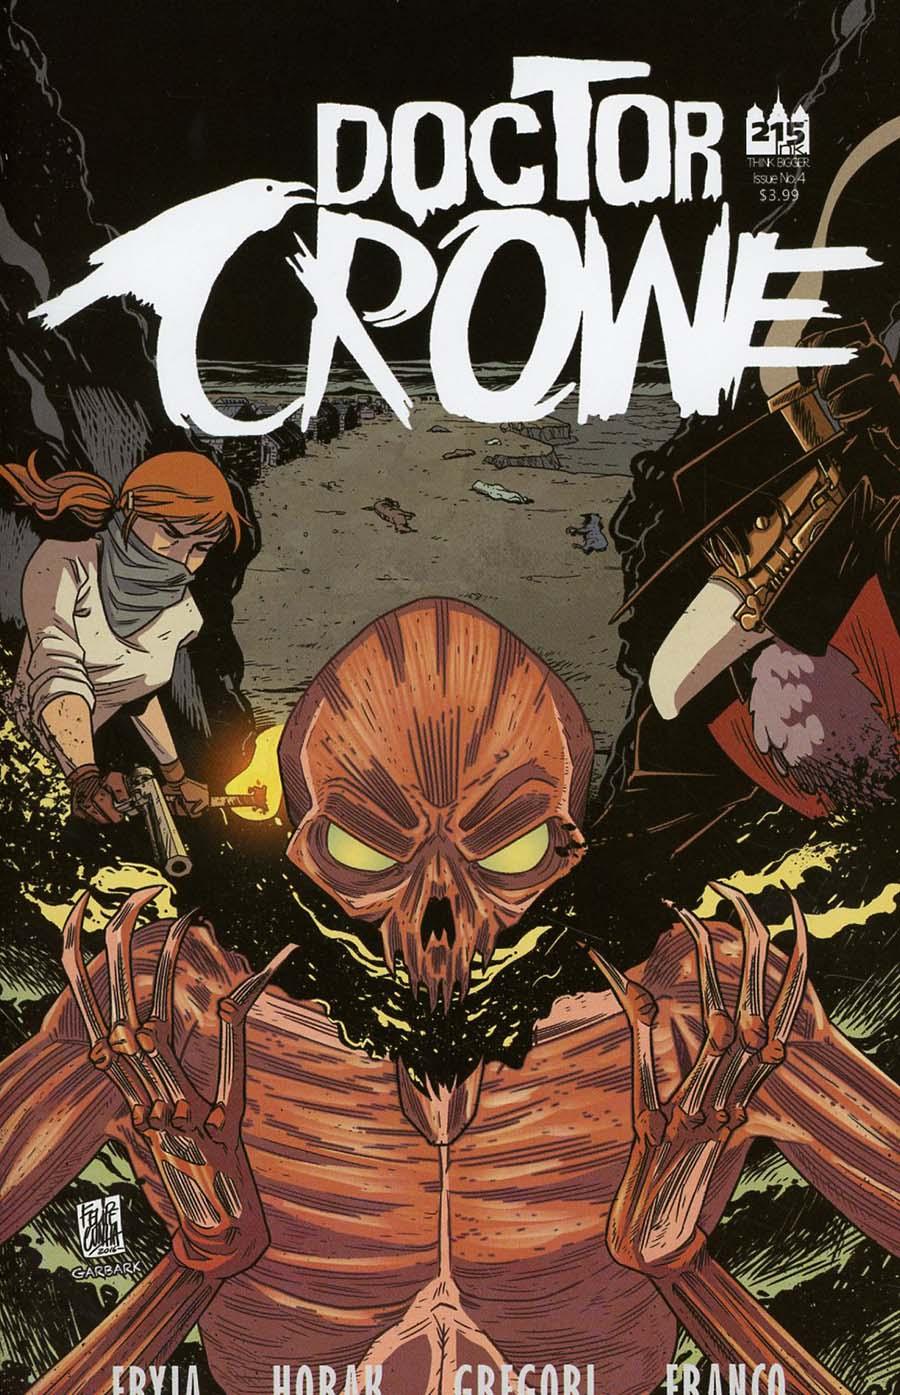 Doctor Crowe Vol. 1 #4